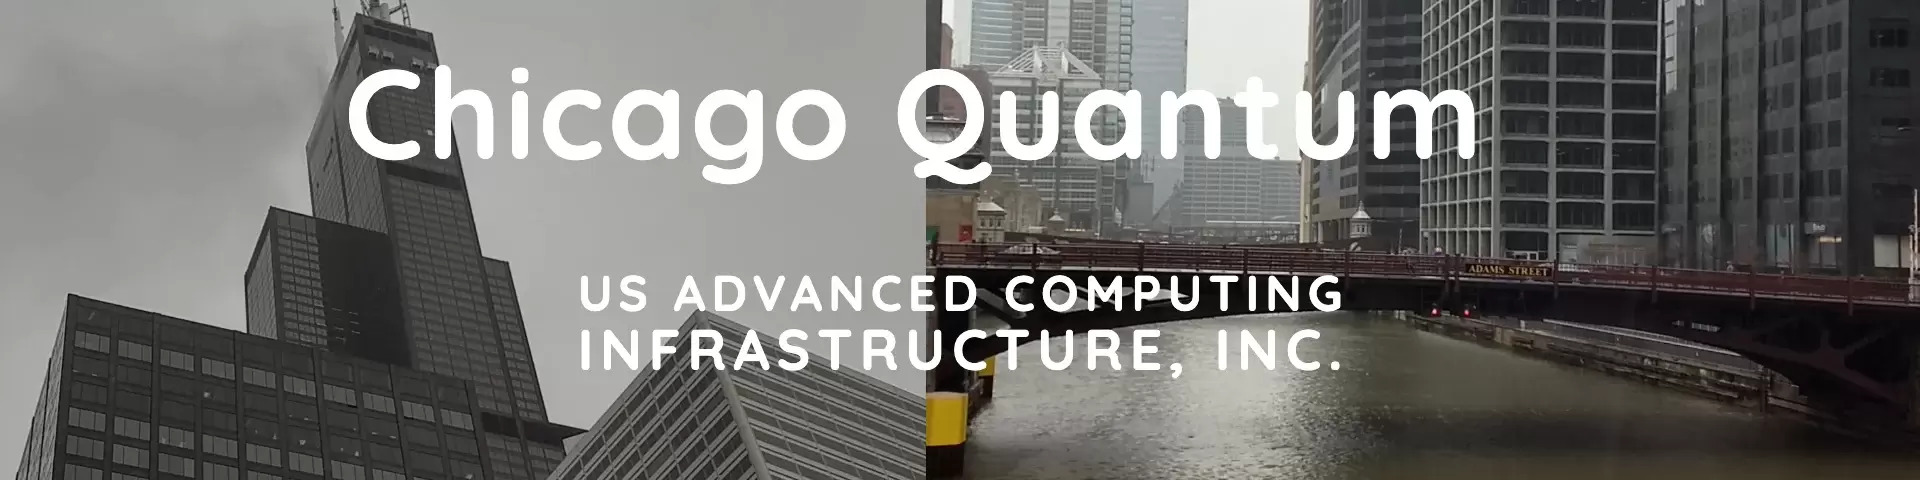 Chicago Quantum logo against two city pictures